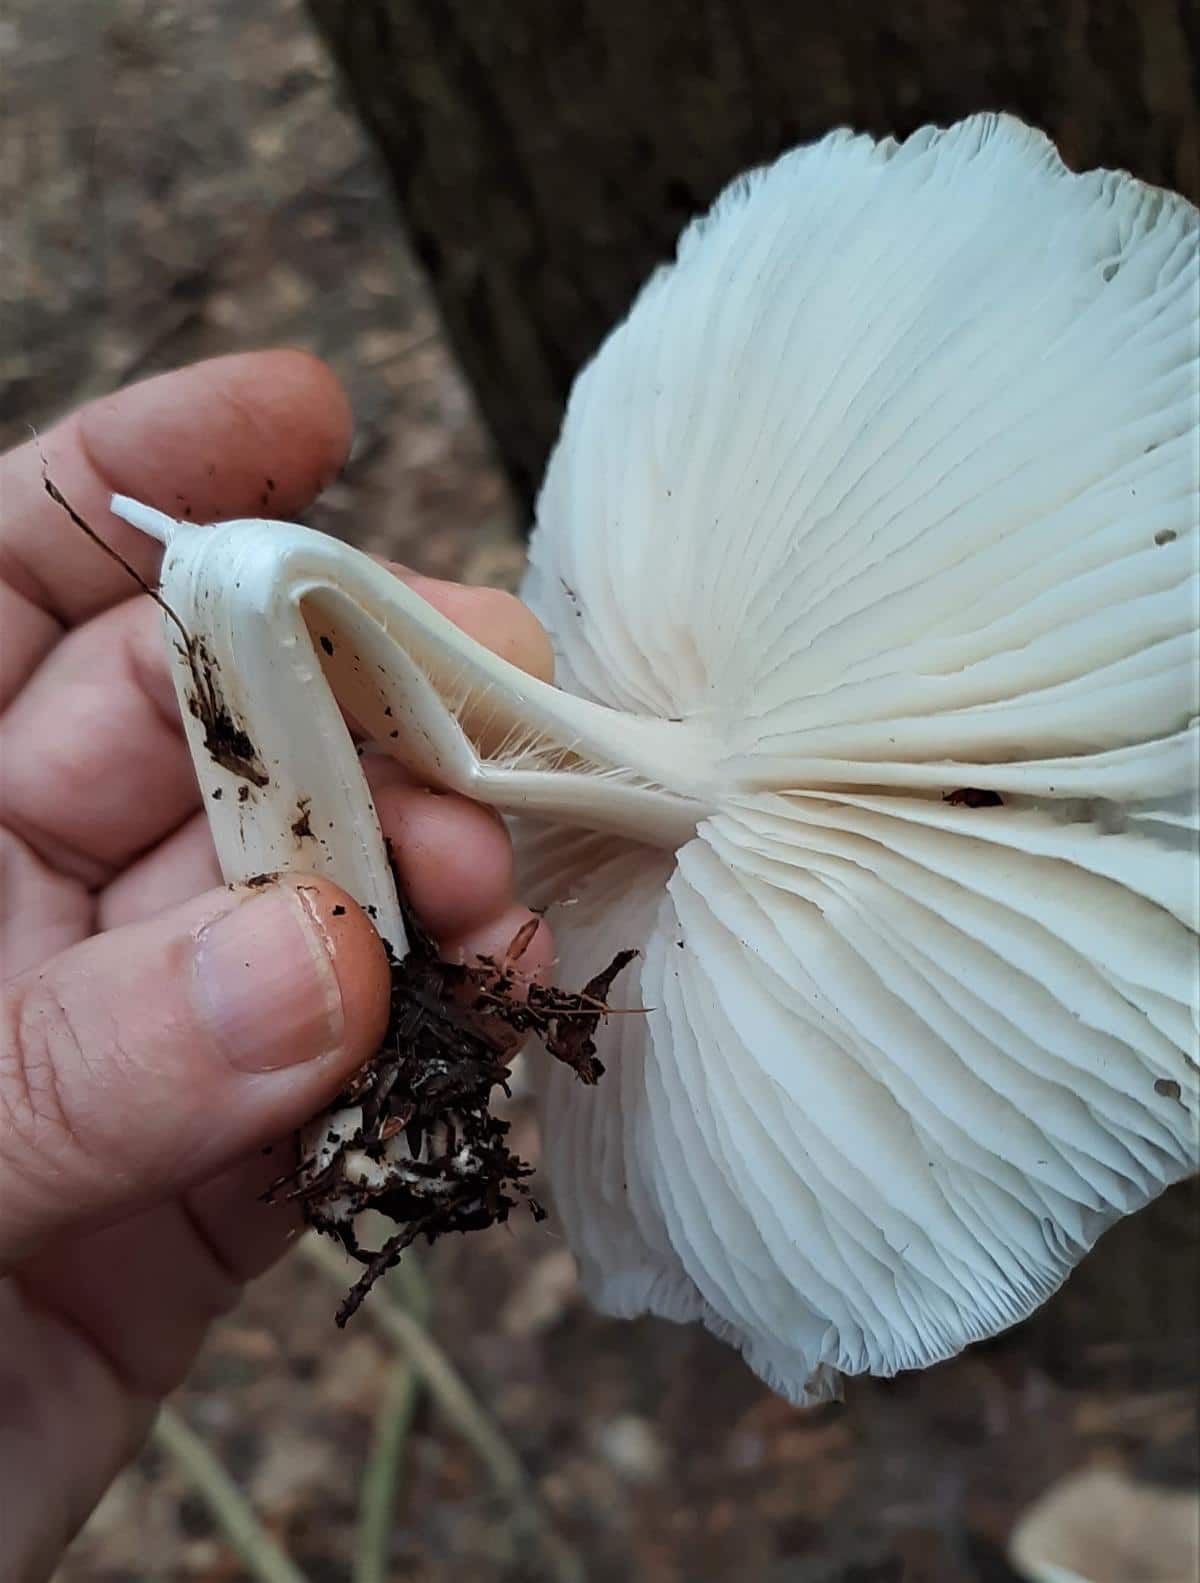 Mushroom with flexible folding stem